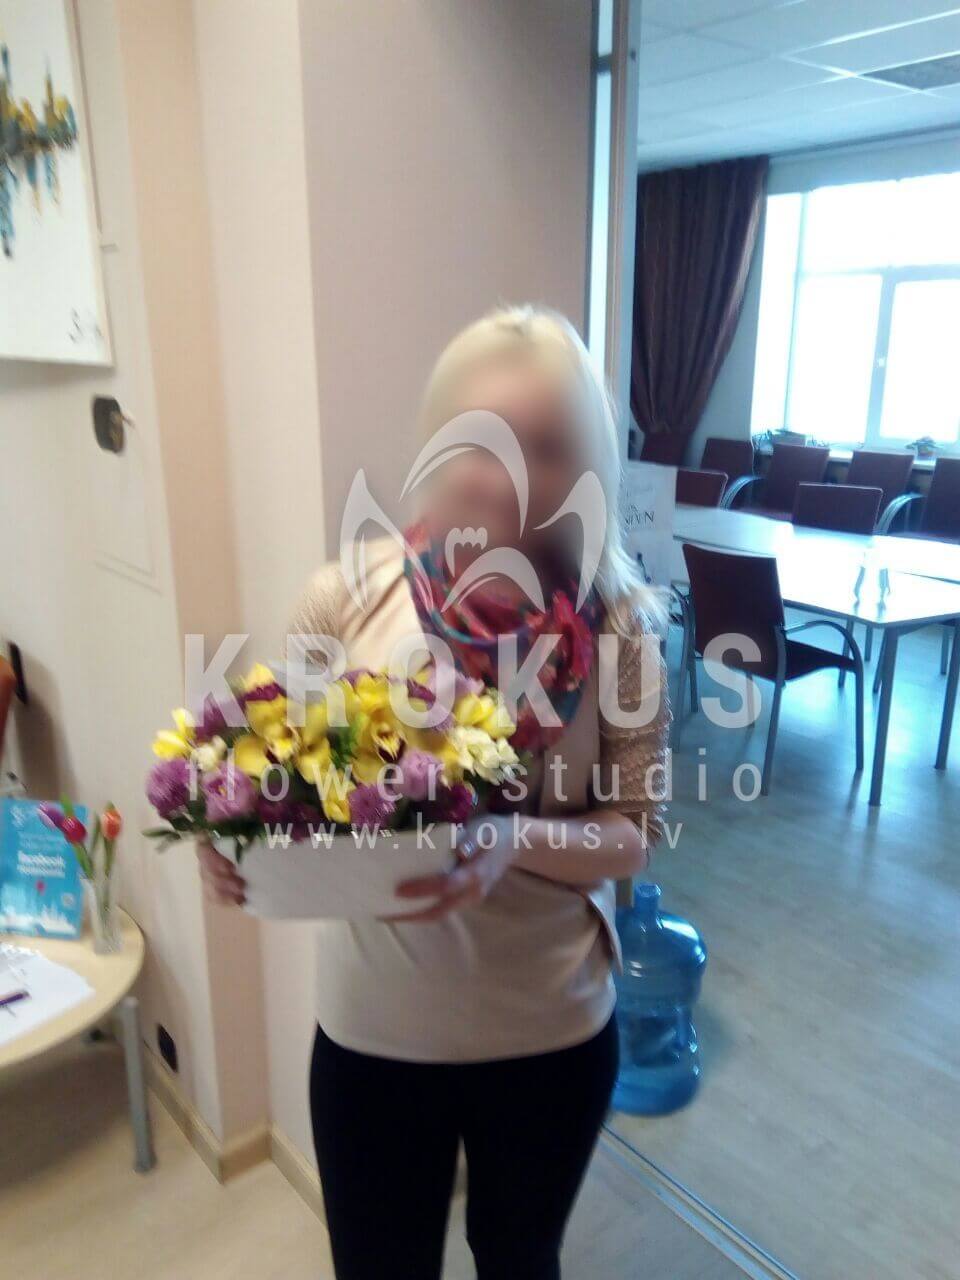 Deliver flowers to Latvia (shrub rosestulipsfreesiapistaciamatthiolaorchidsroyal tulipslisianthuses (eustoma))